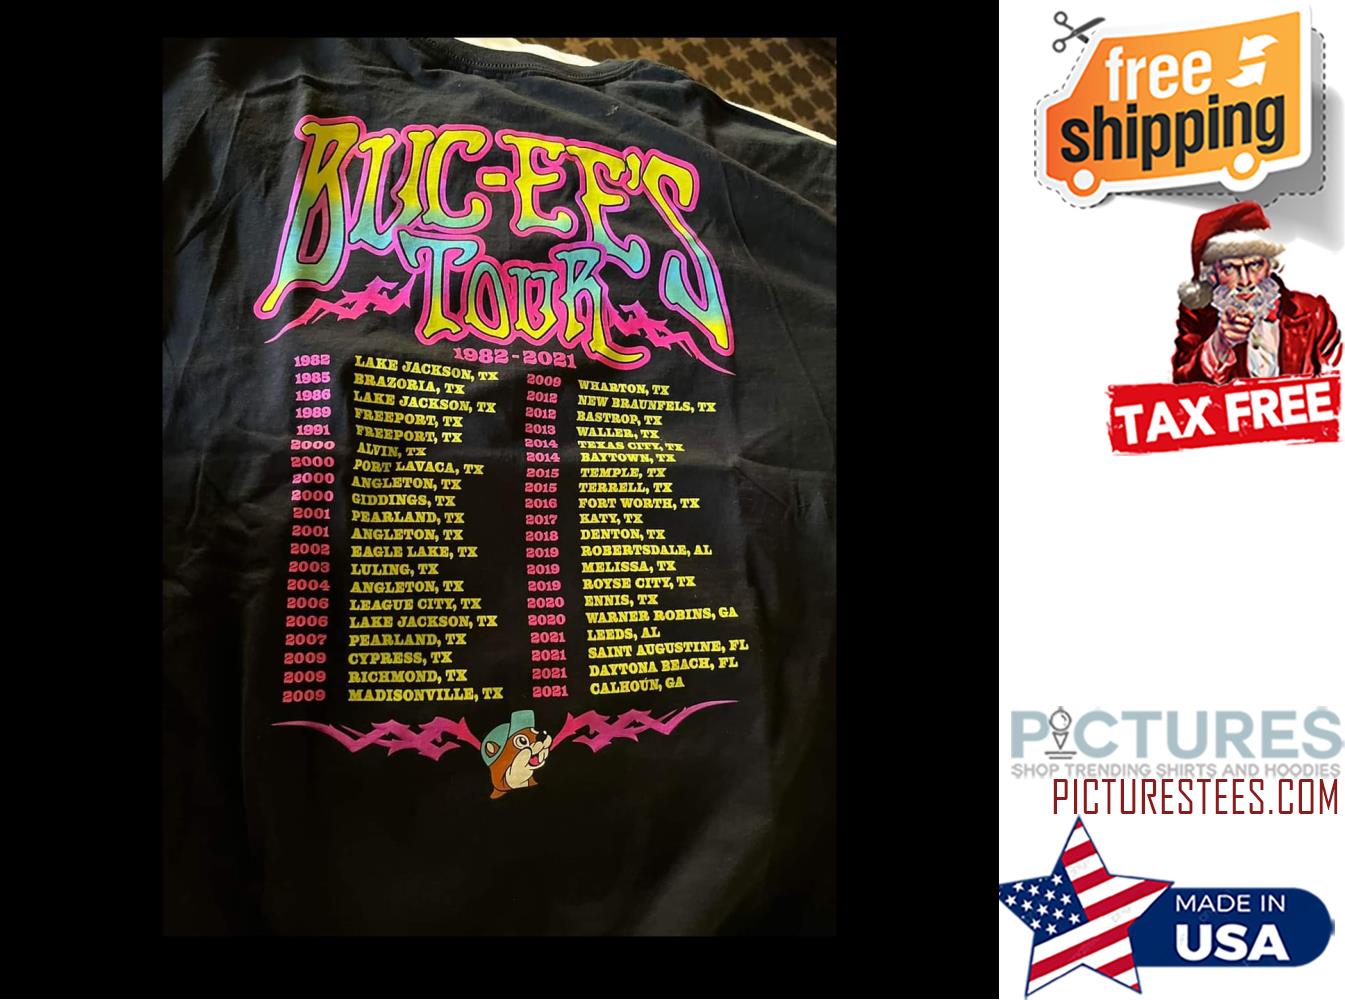 FREE shipping Bucee's tour 19822021 list music shirt, Unisex tee